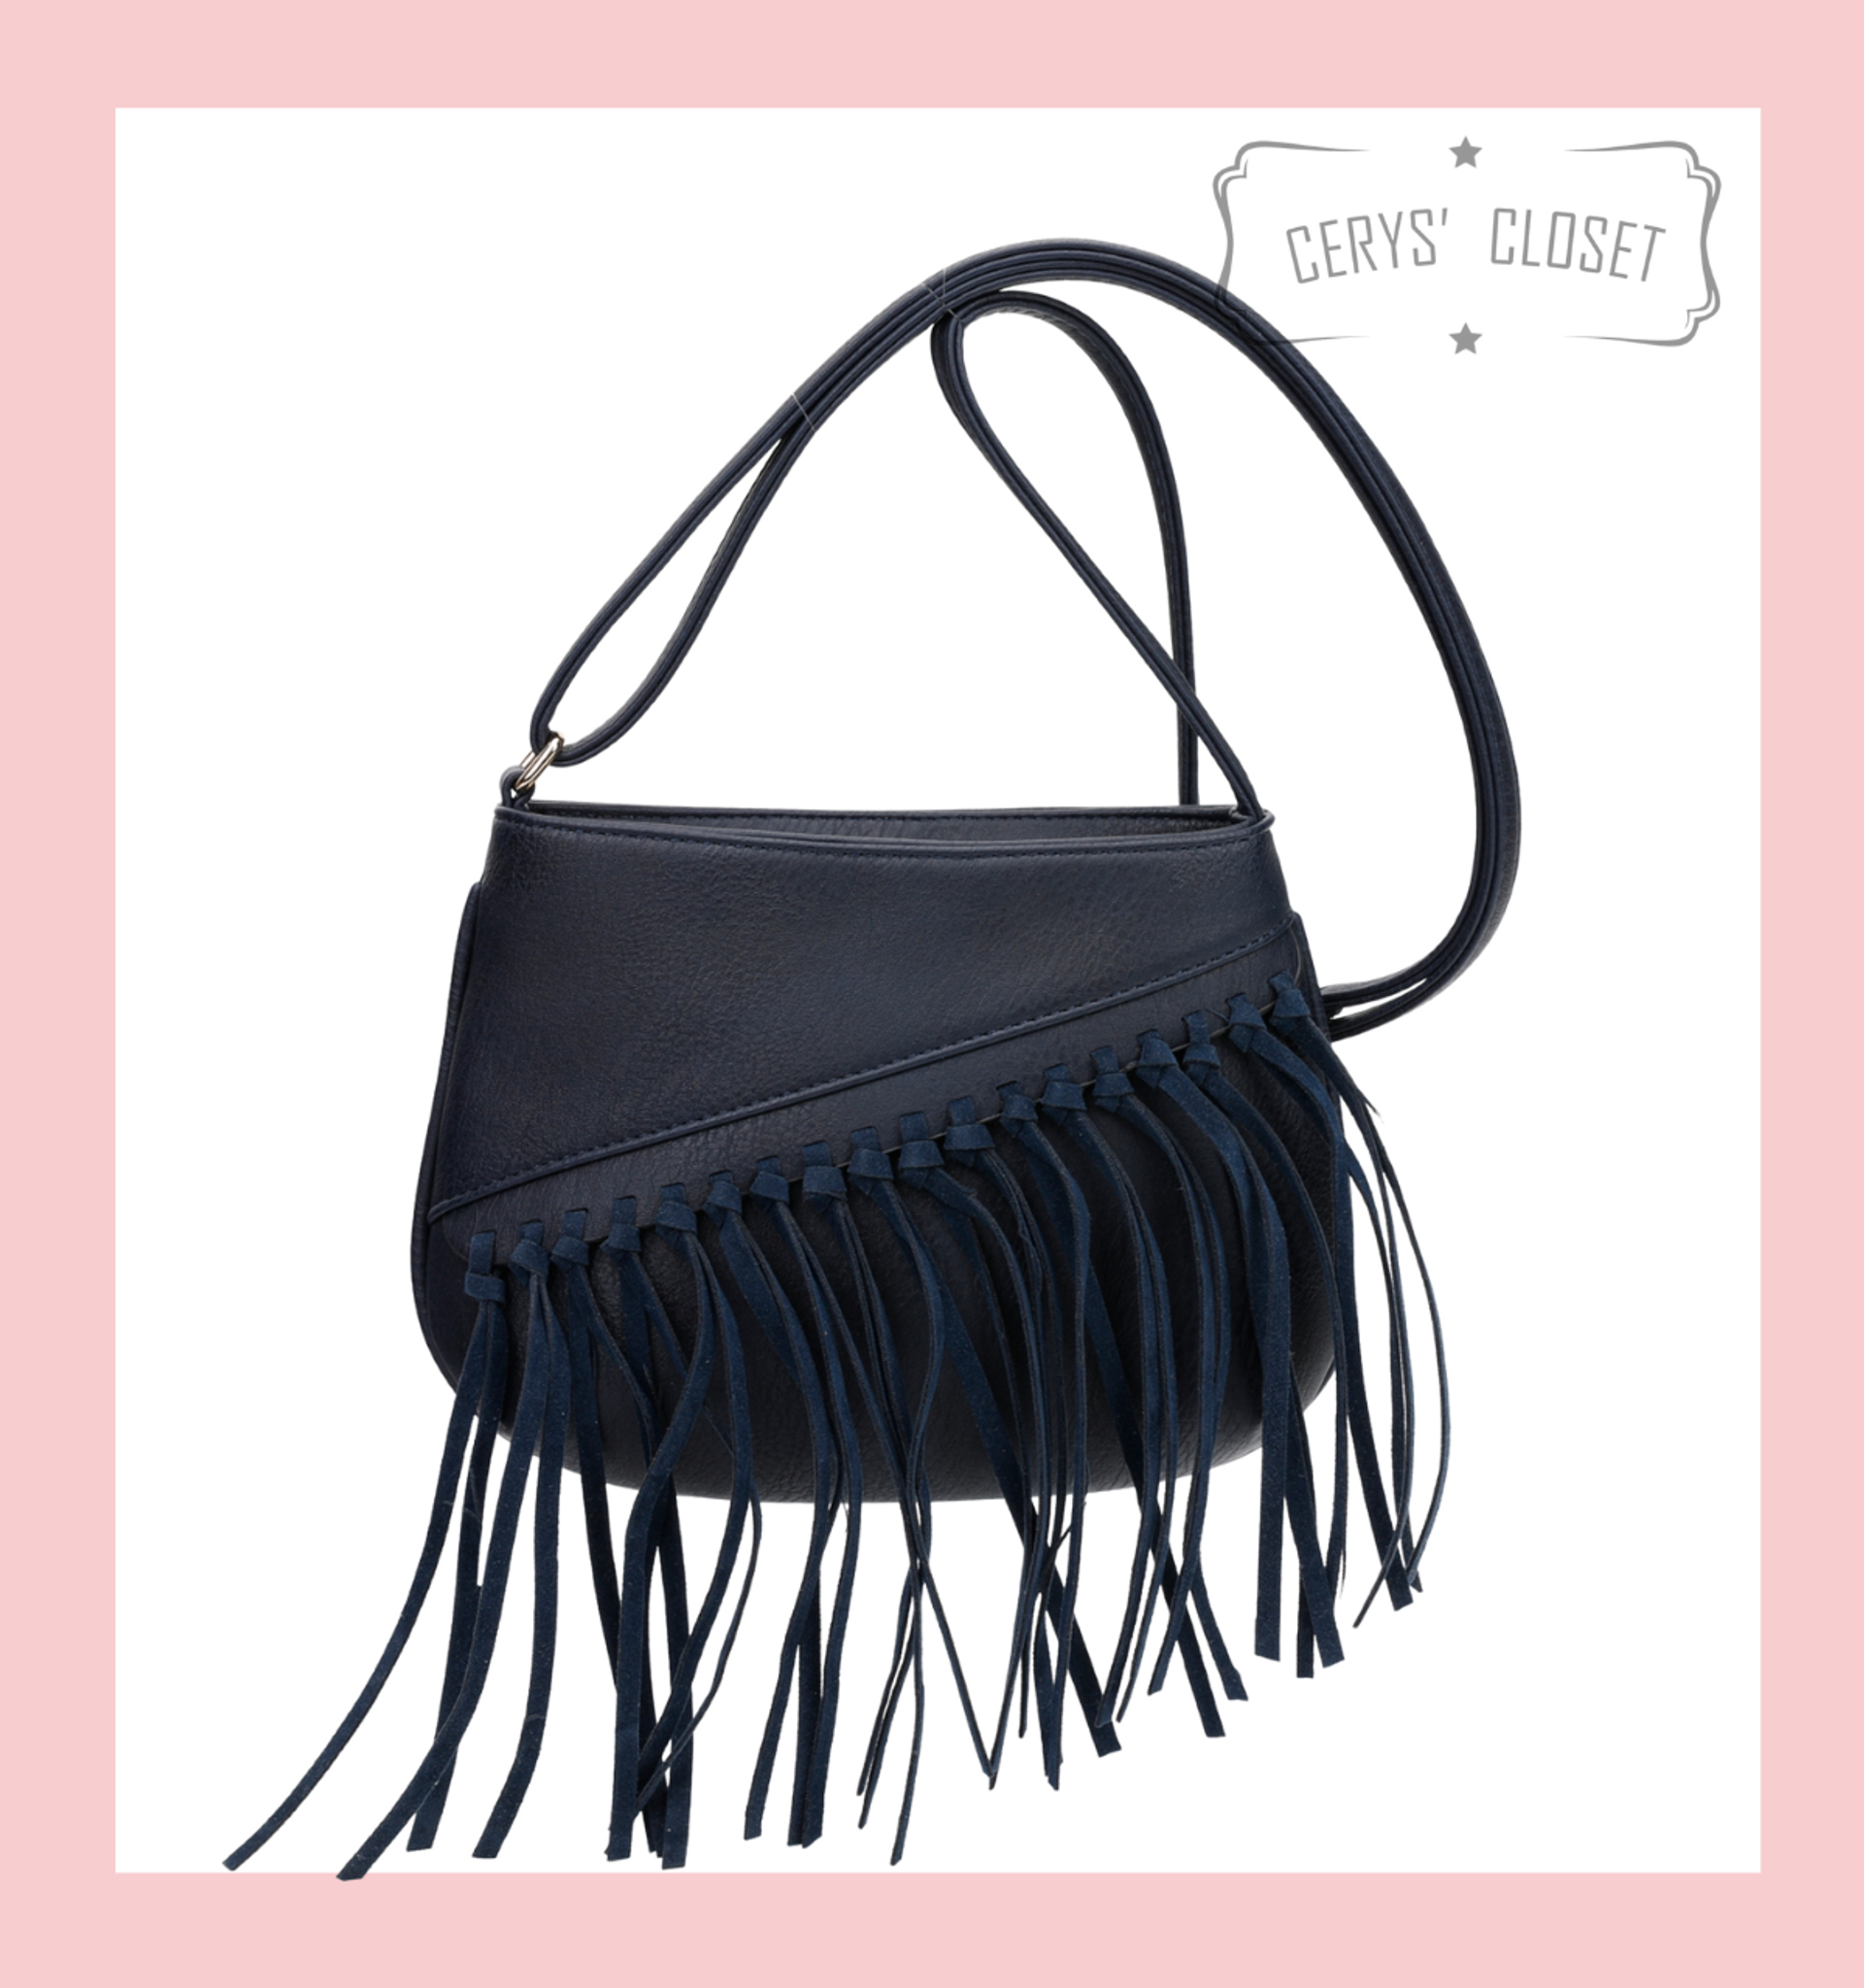 Mexican Embroidered Black Floral Handbag Tassels Crossbody Shoulder Purse  Clutch | eBay